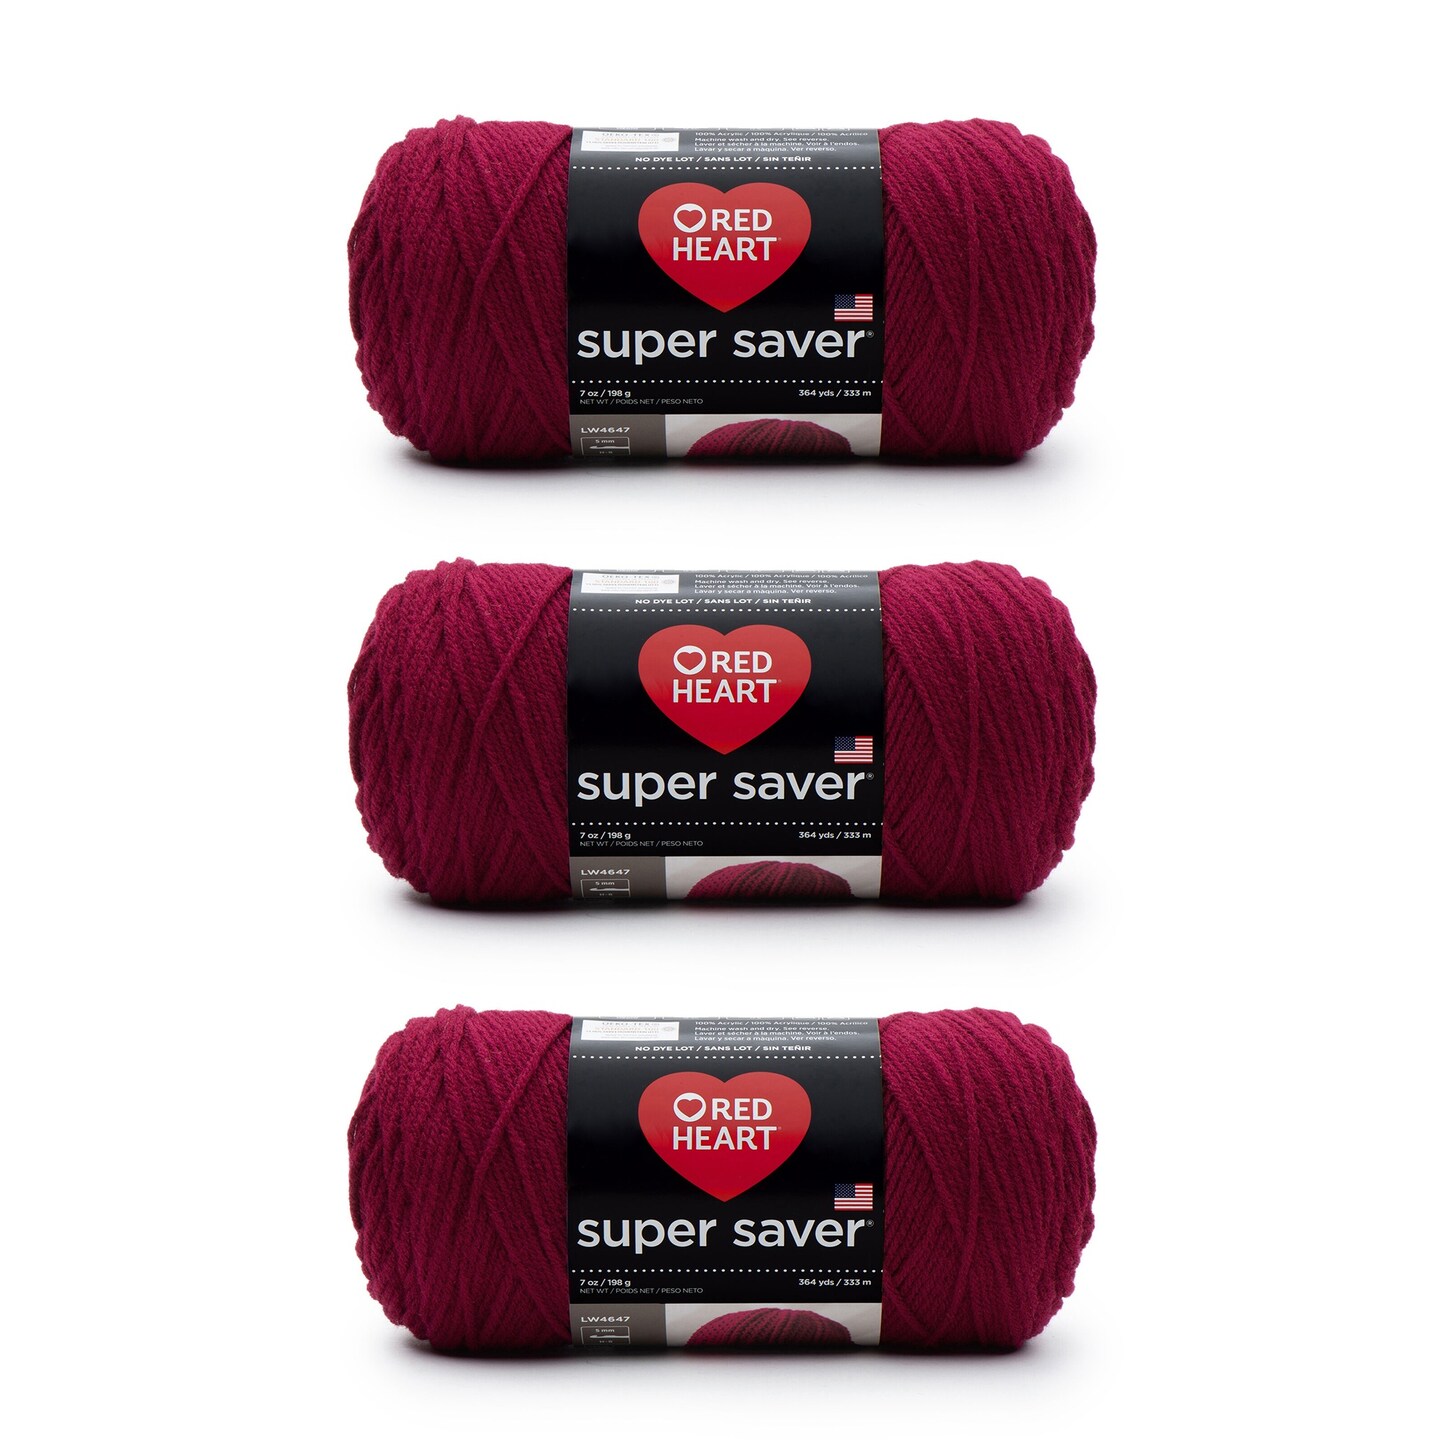 Red Heart Super Saver Burgundy Yarn - 3 Pack of 198g/7oz - Acrylic